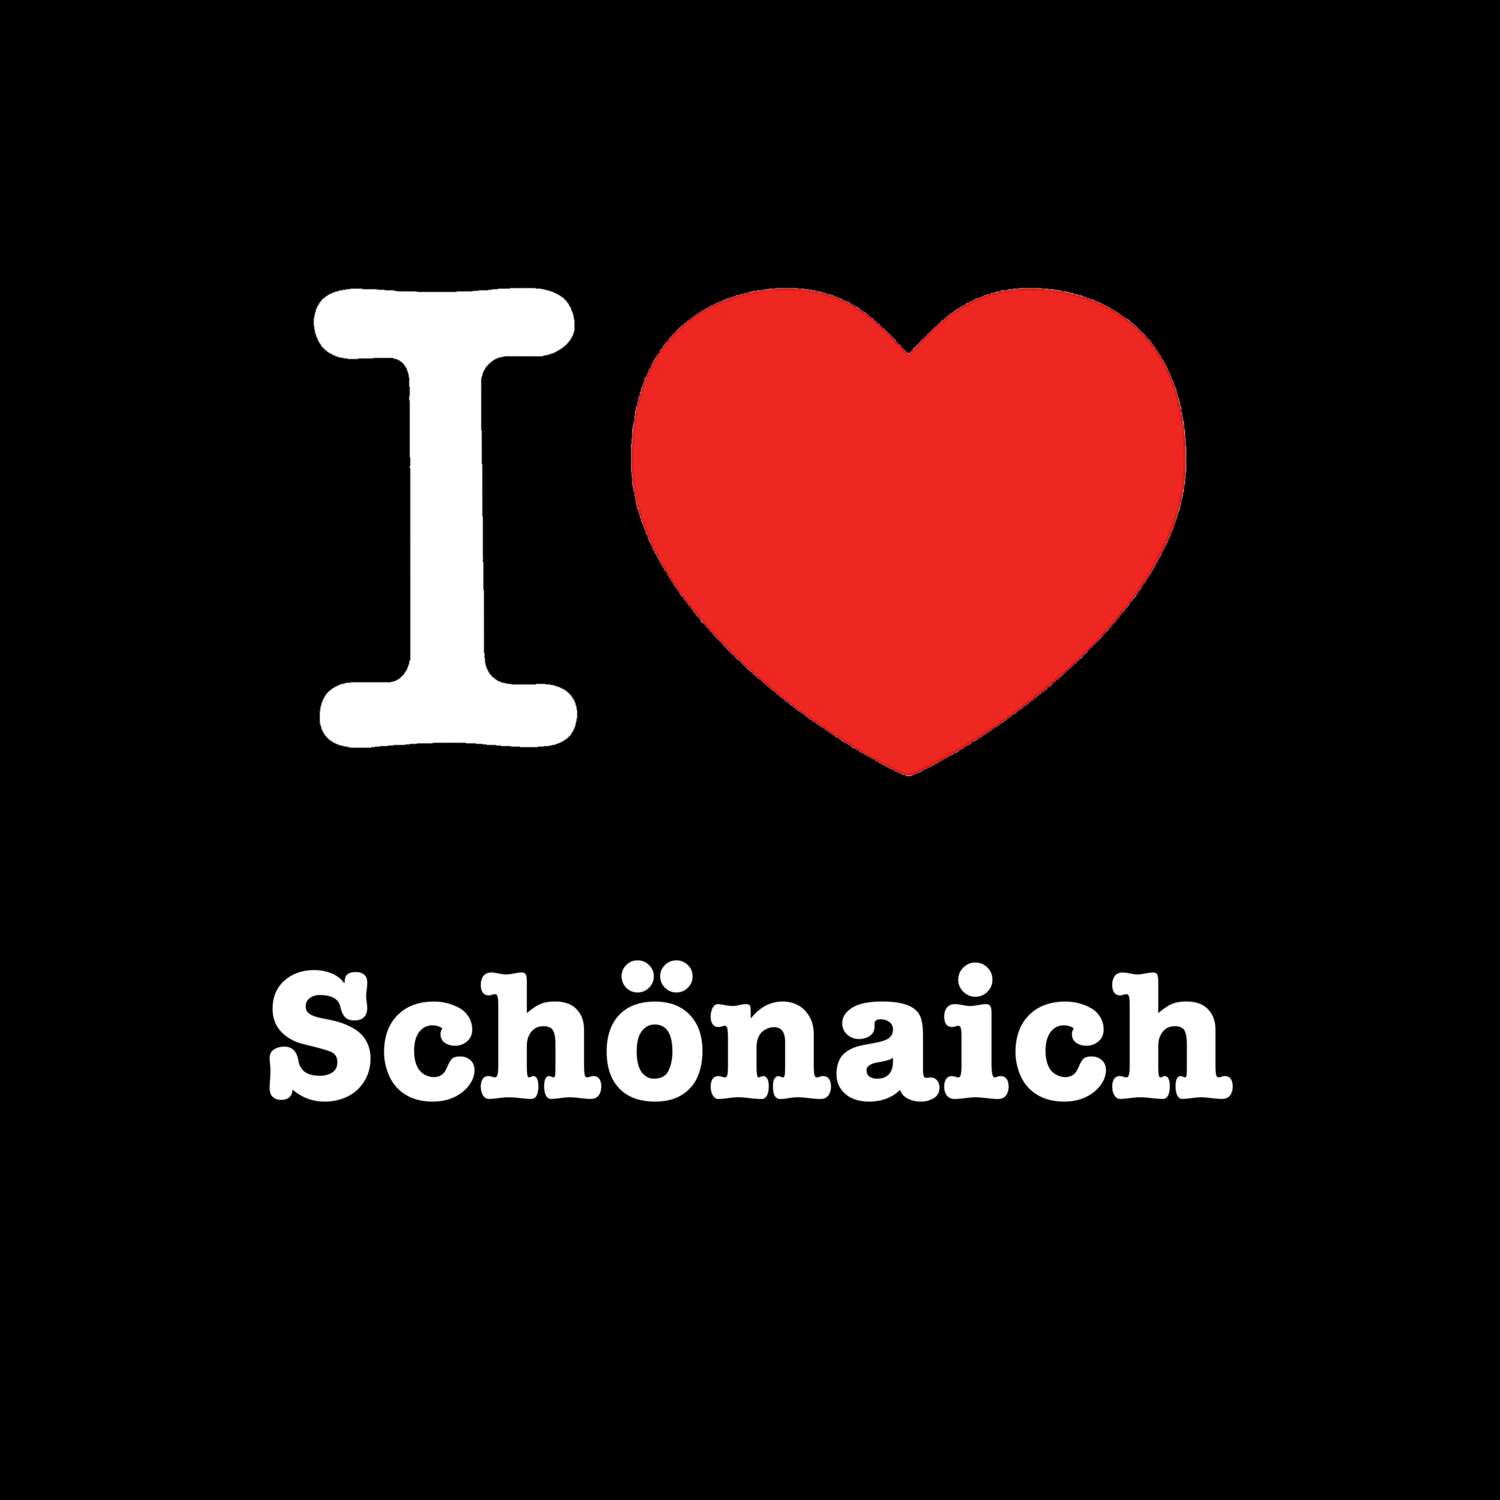 Schönaich T-Shirt »I love«